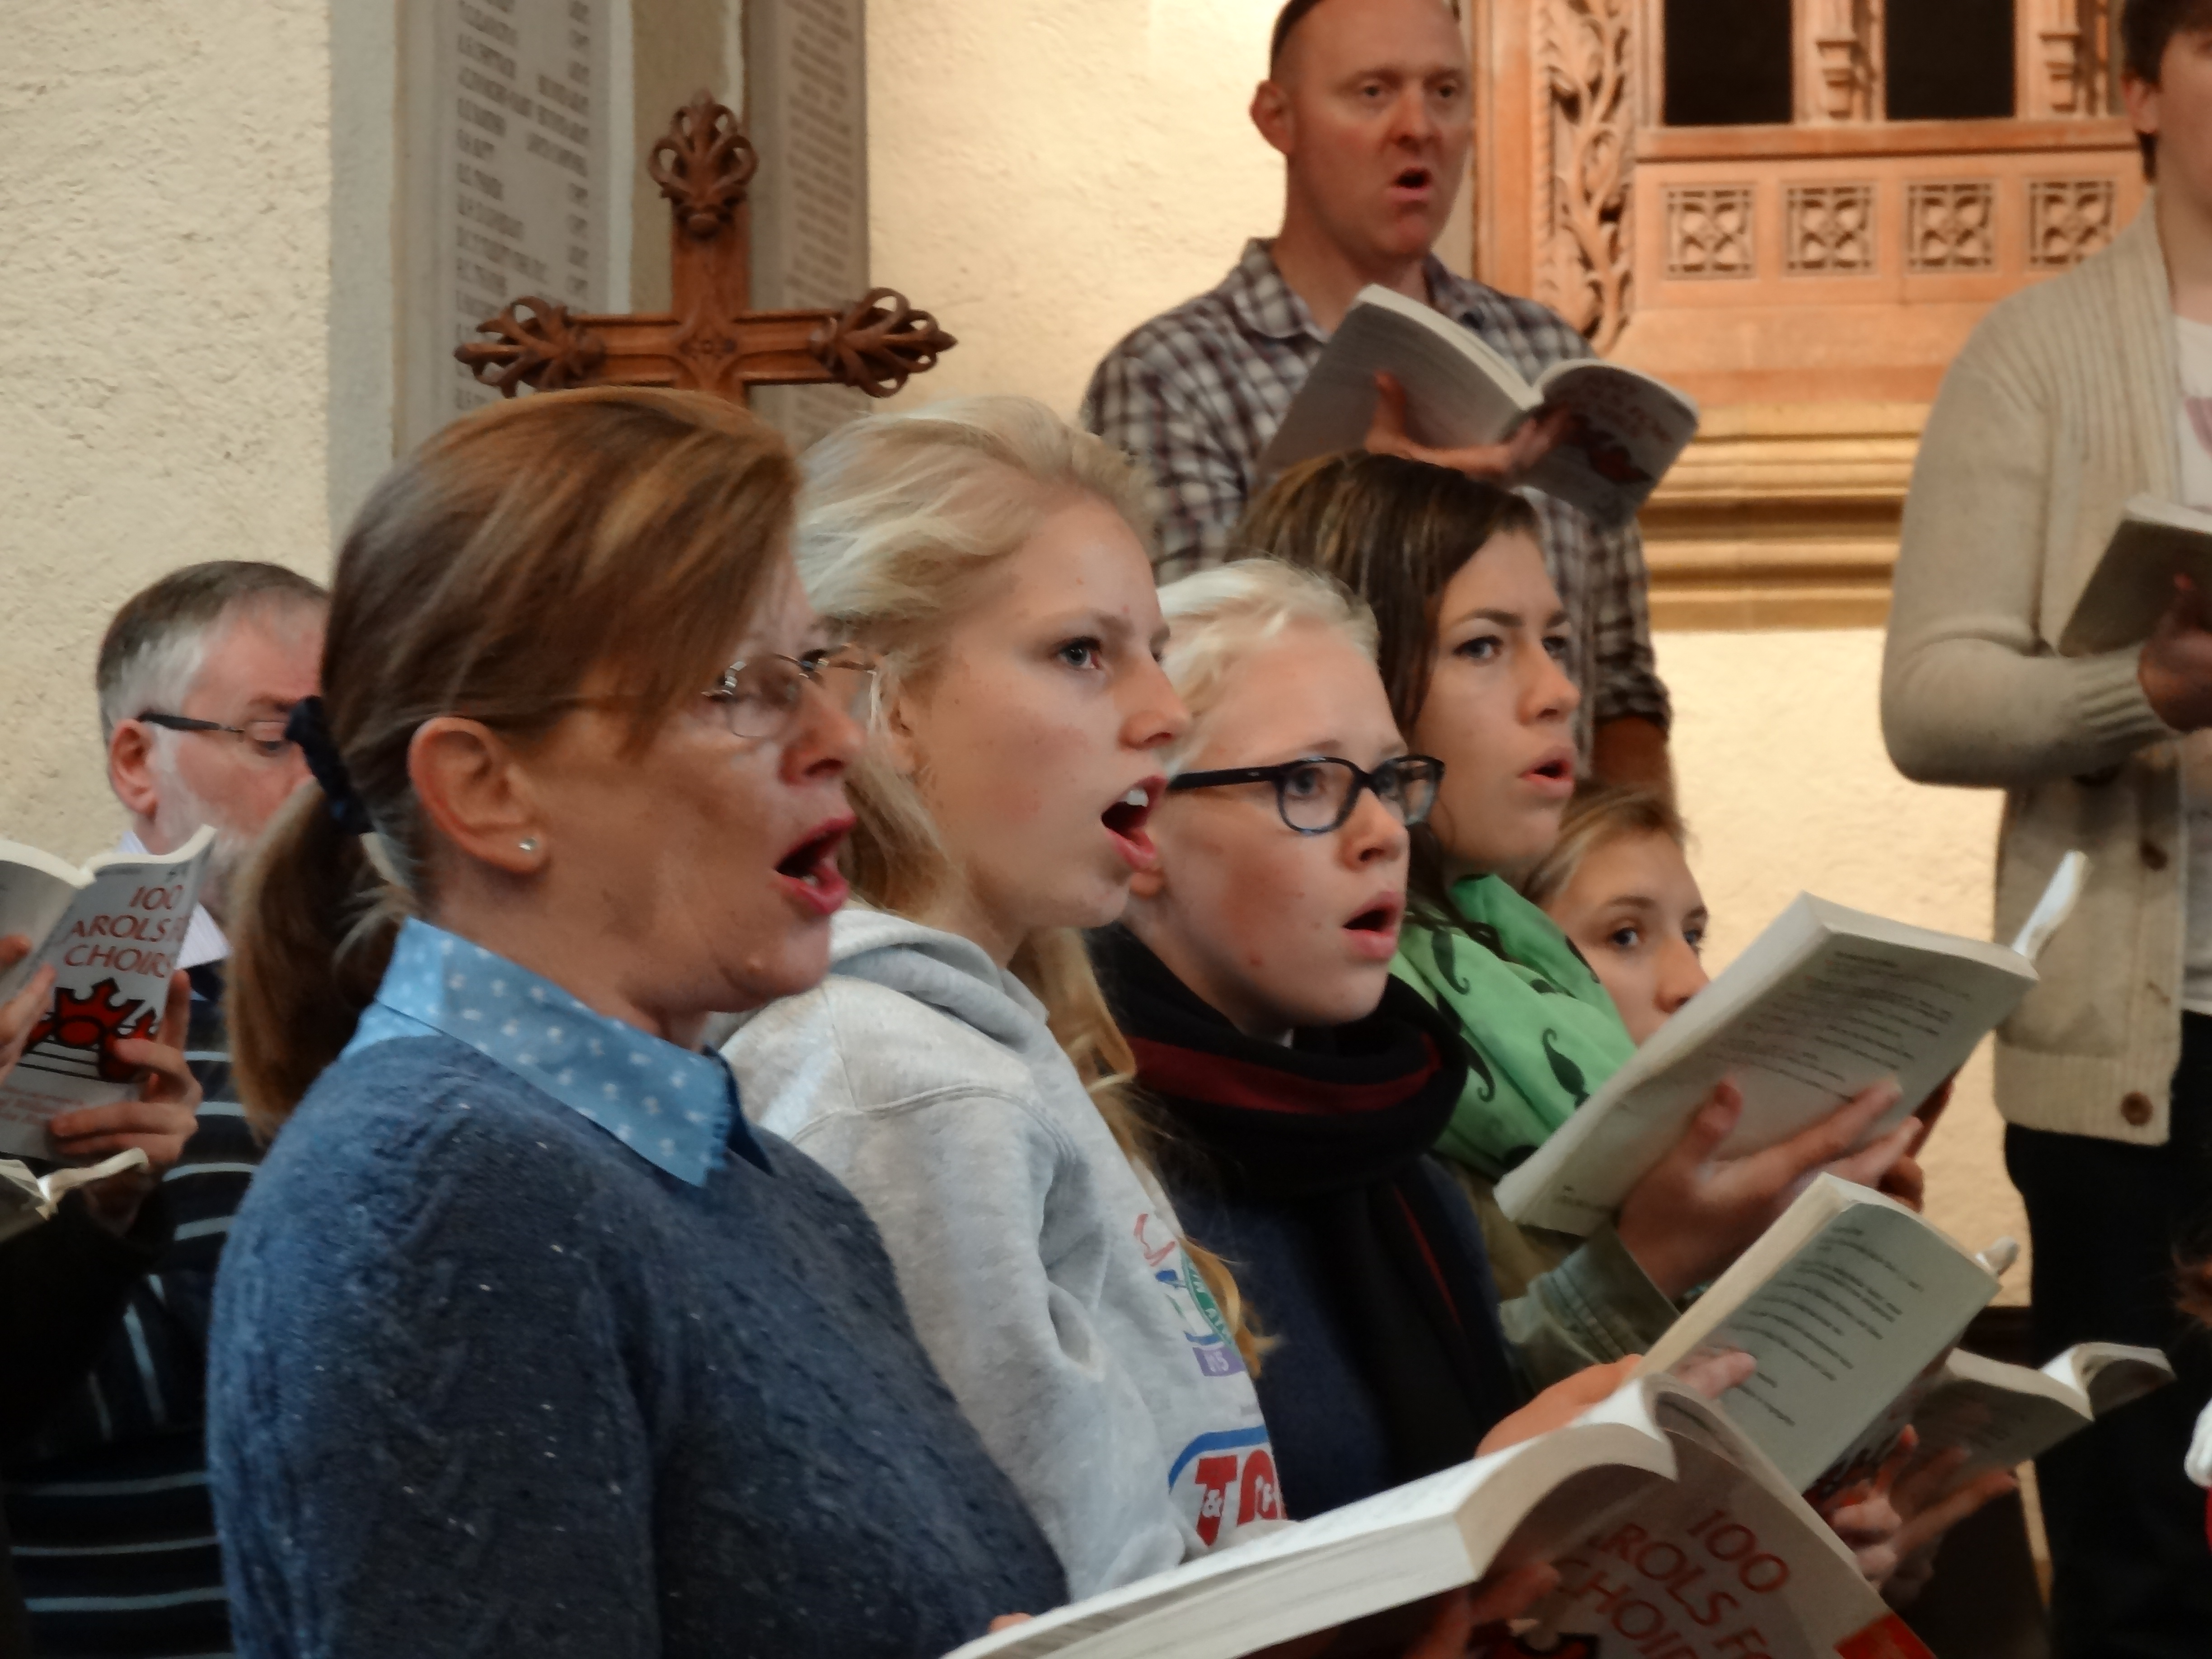 The Senior Choirs recording on Saturday